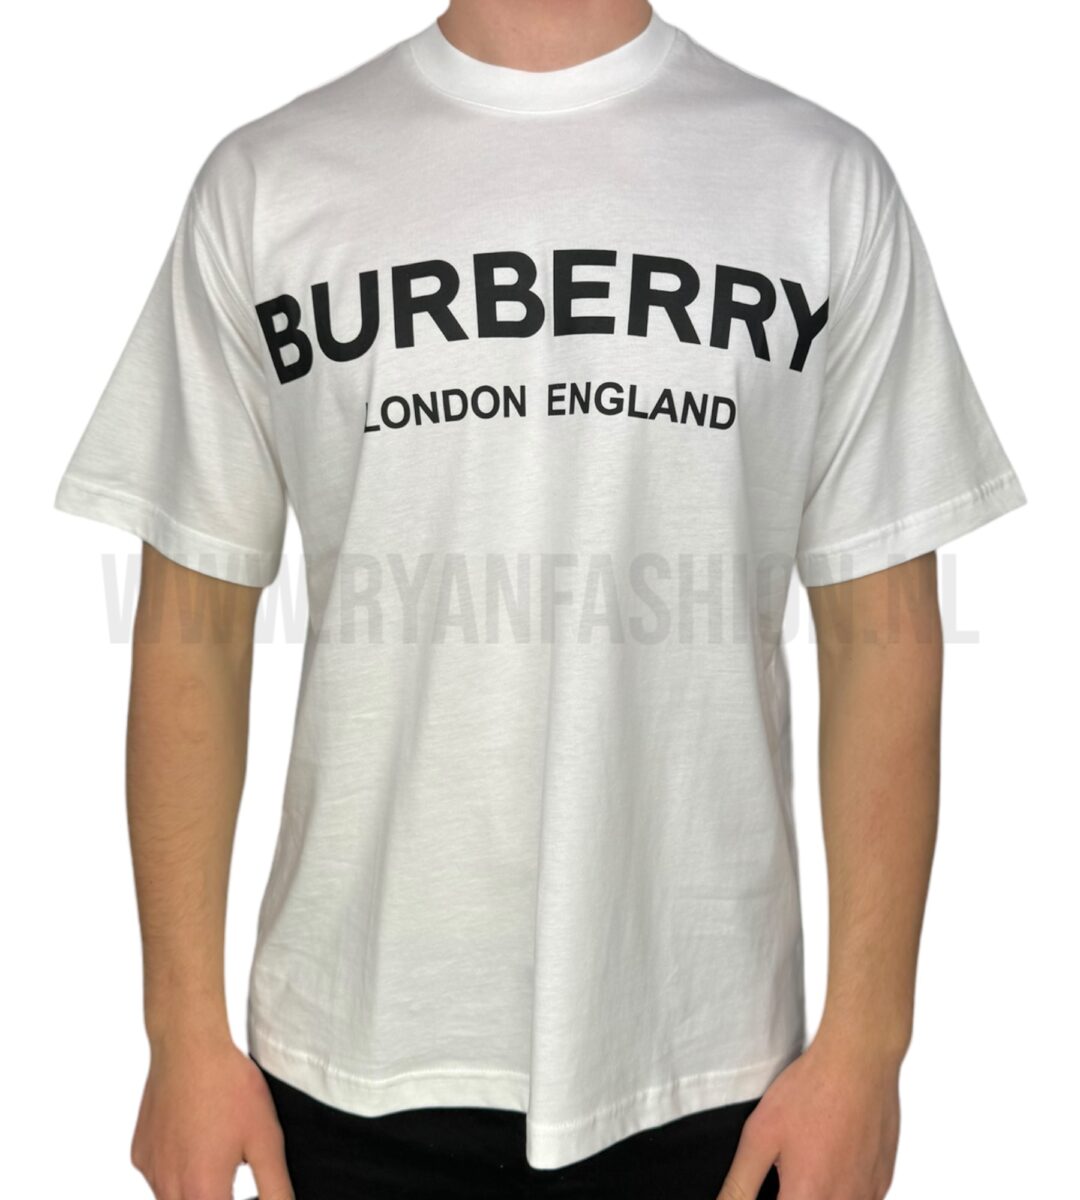 Burberry London England T-Shirt White